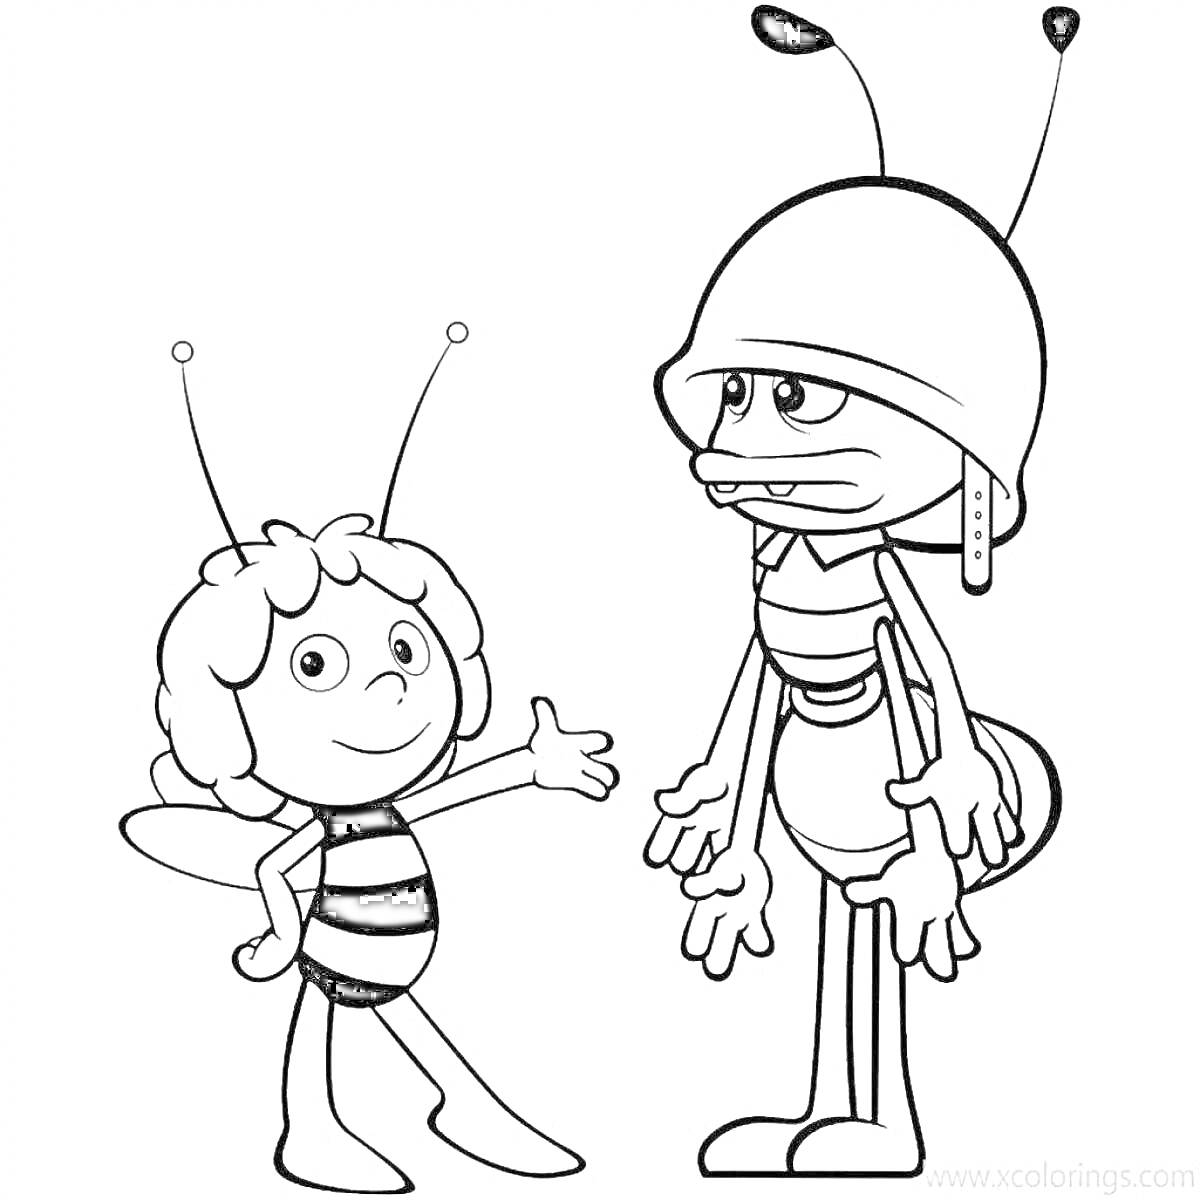 Раскраска Пчелка Майя и её друг муравей в шлеме